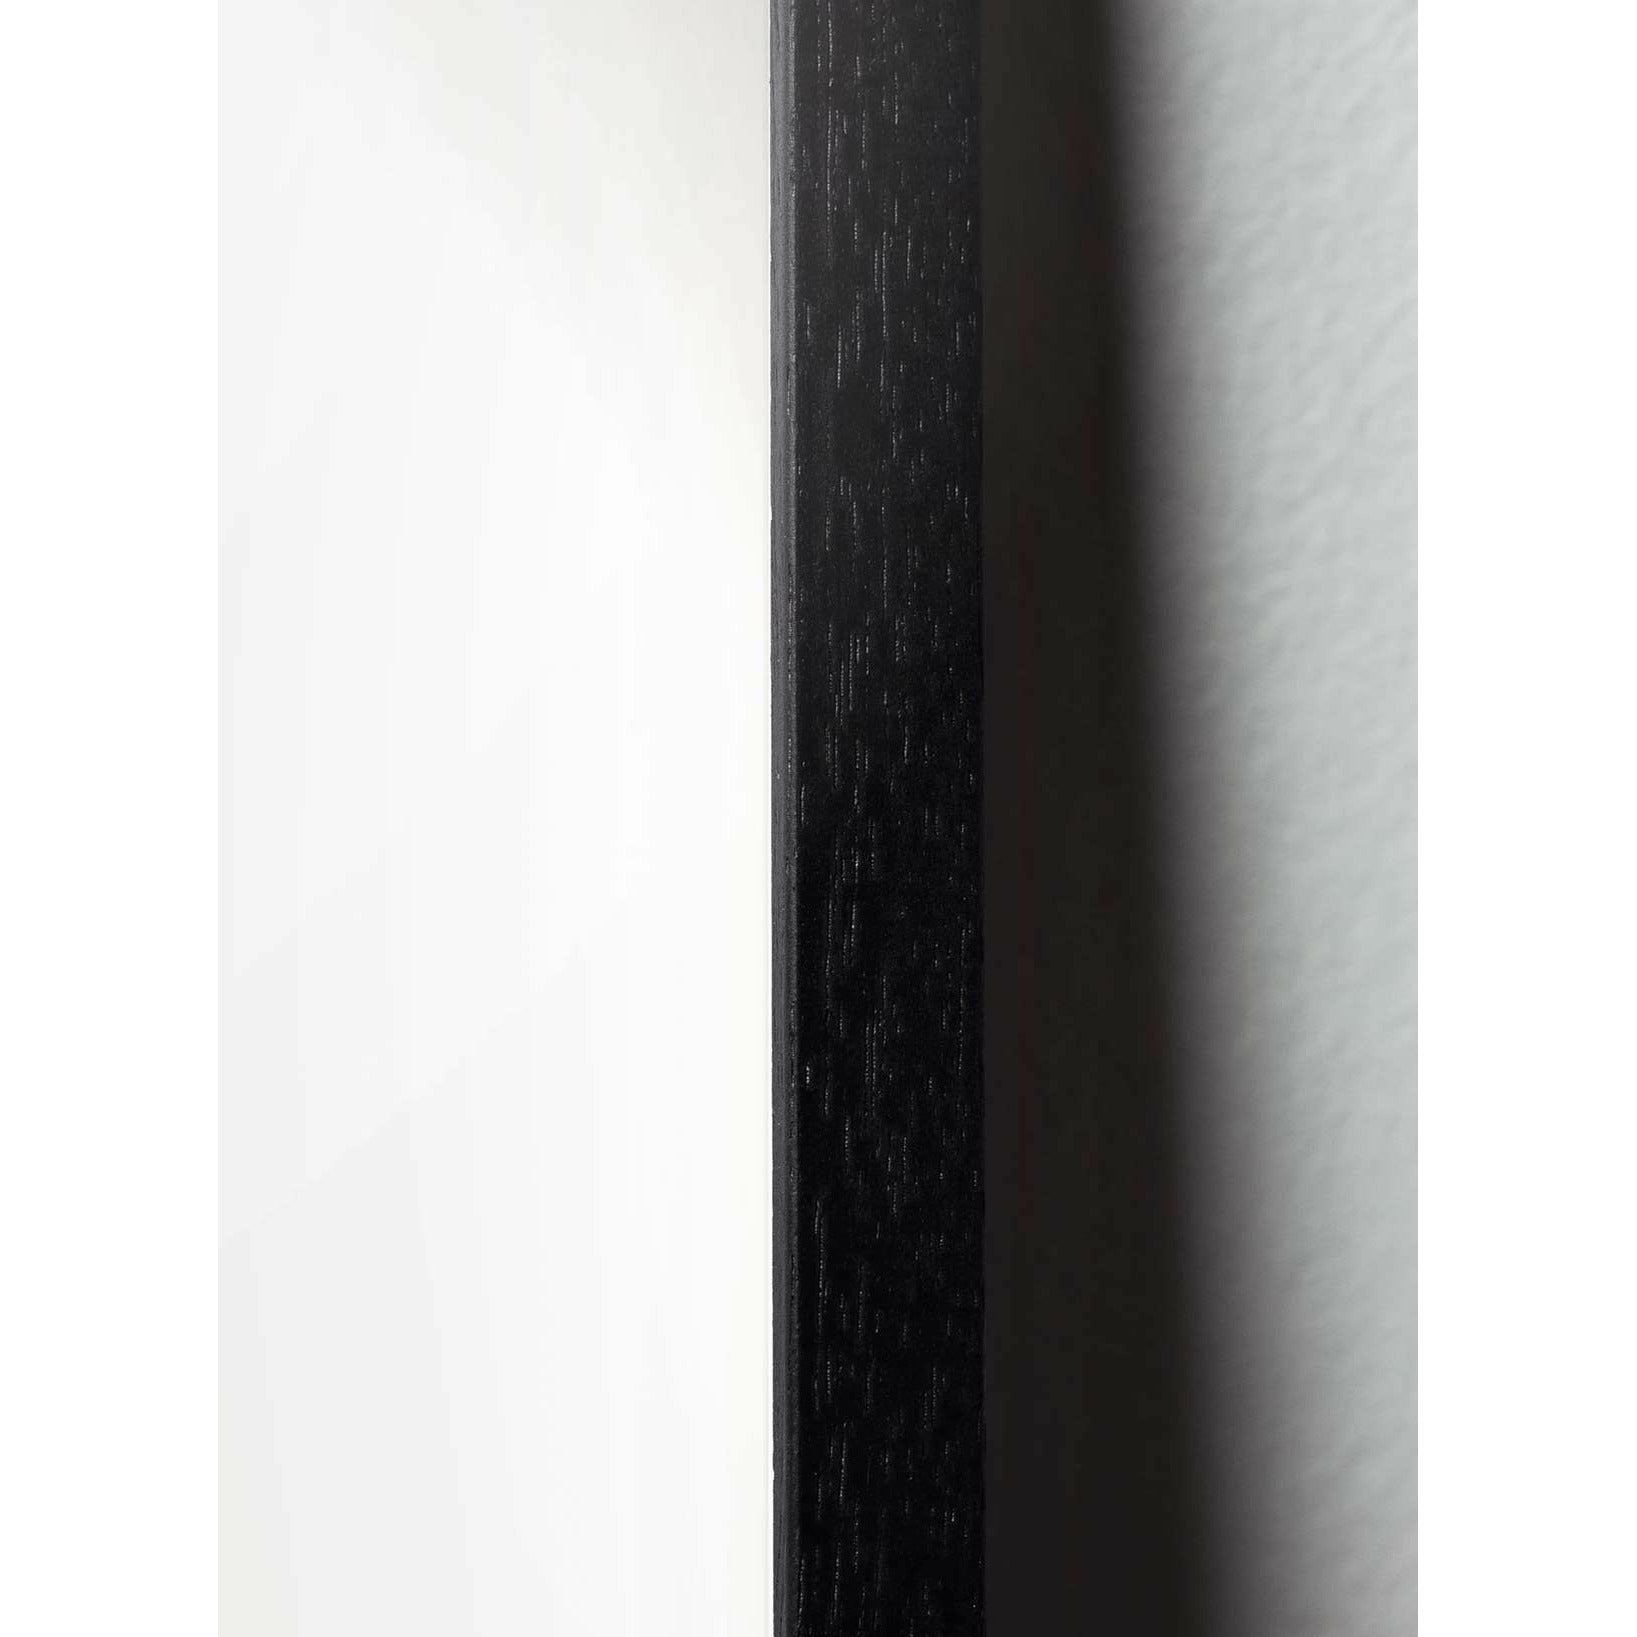 Póster de icono de diseño de caída de creación, marco hecho de madera lacada negra 50 x70 cm, morado